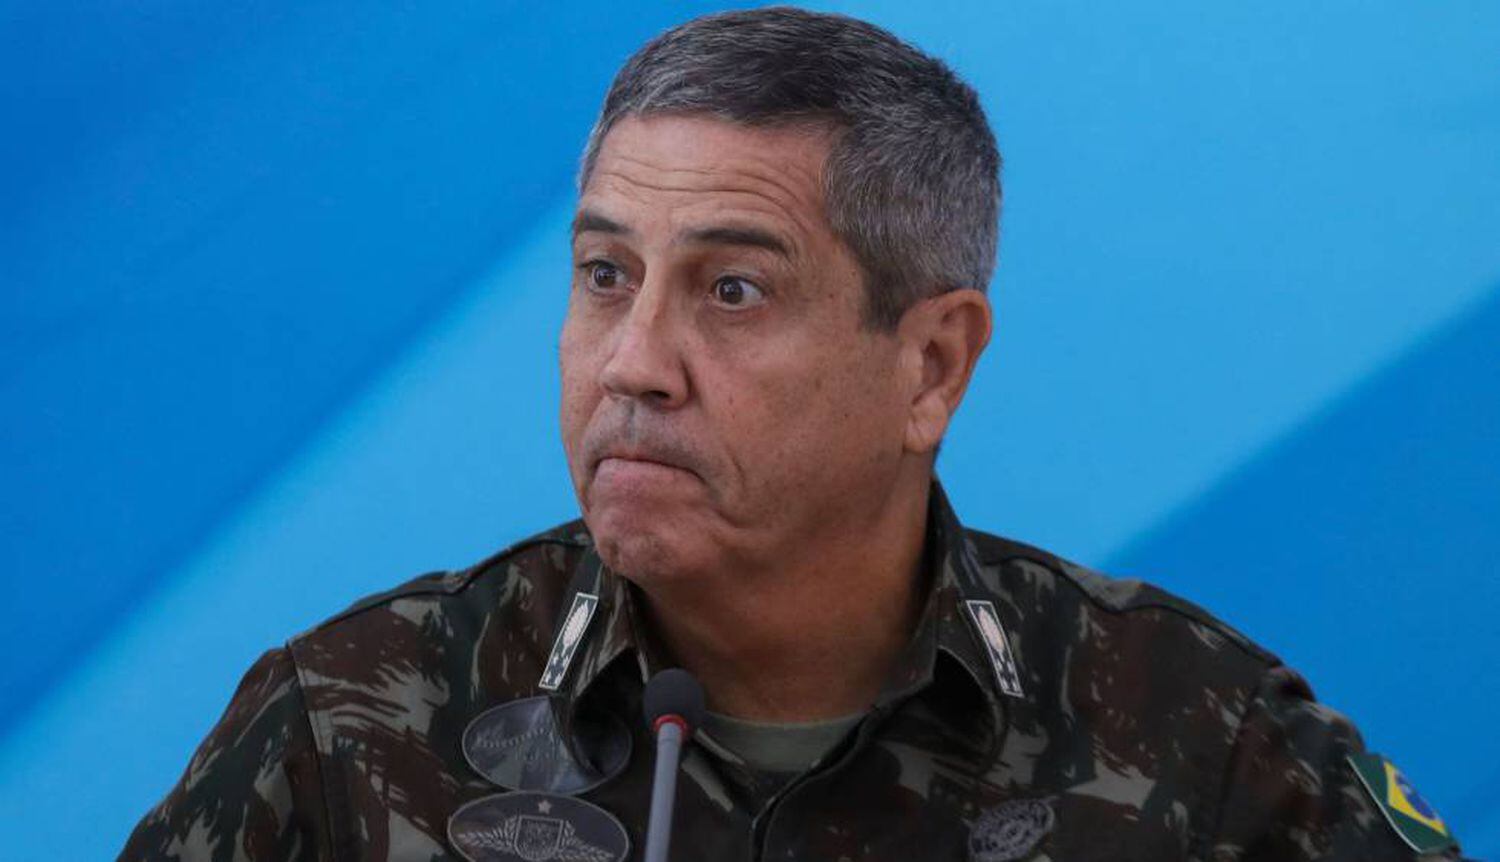 O general Walter Souza Braga Netto, ex-interventor no Rio, será o novo chefe da Casa Civil.